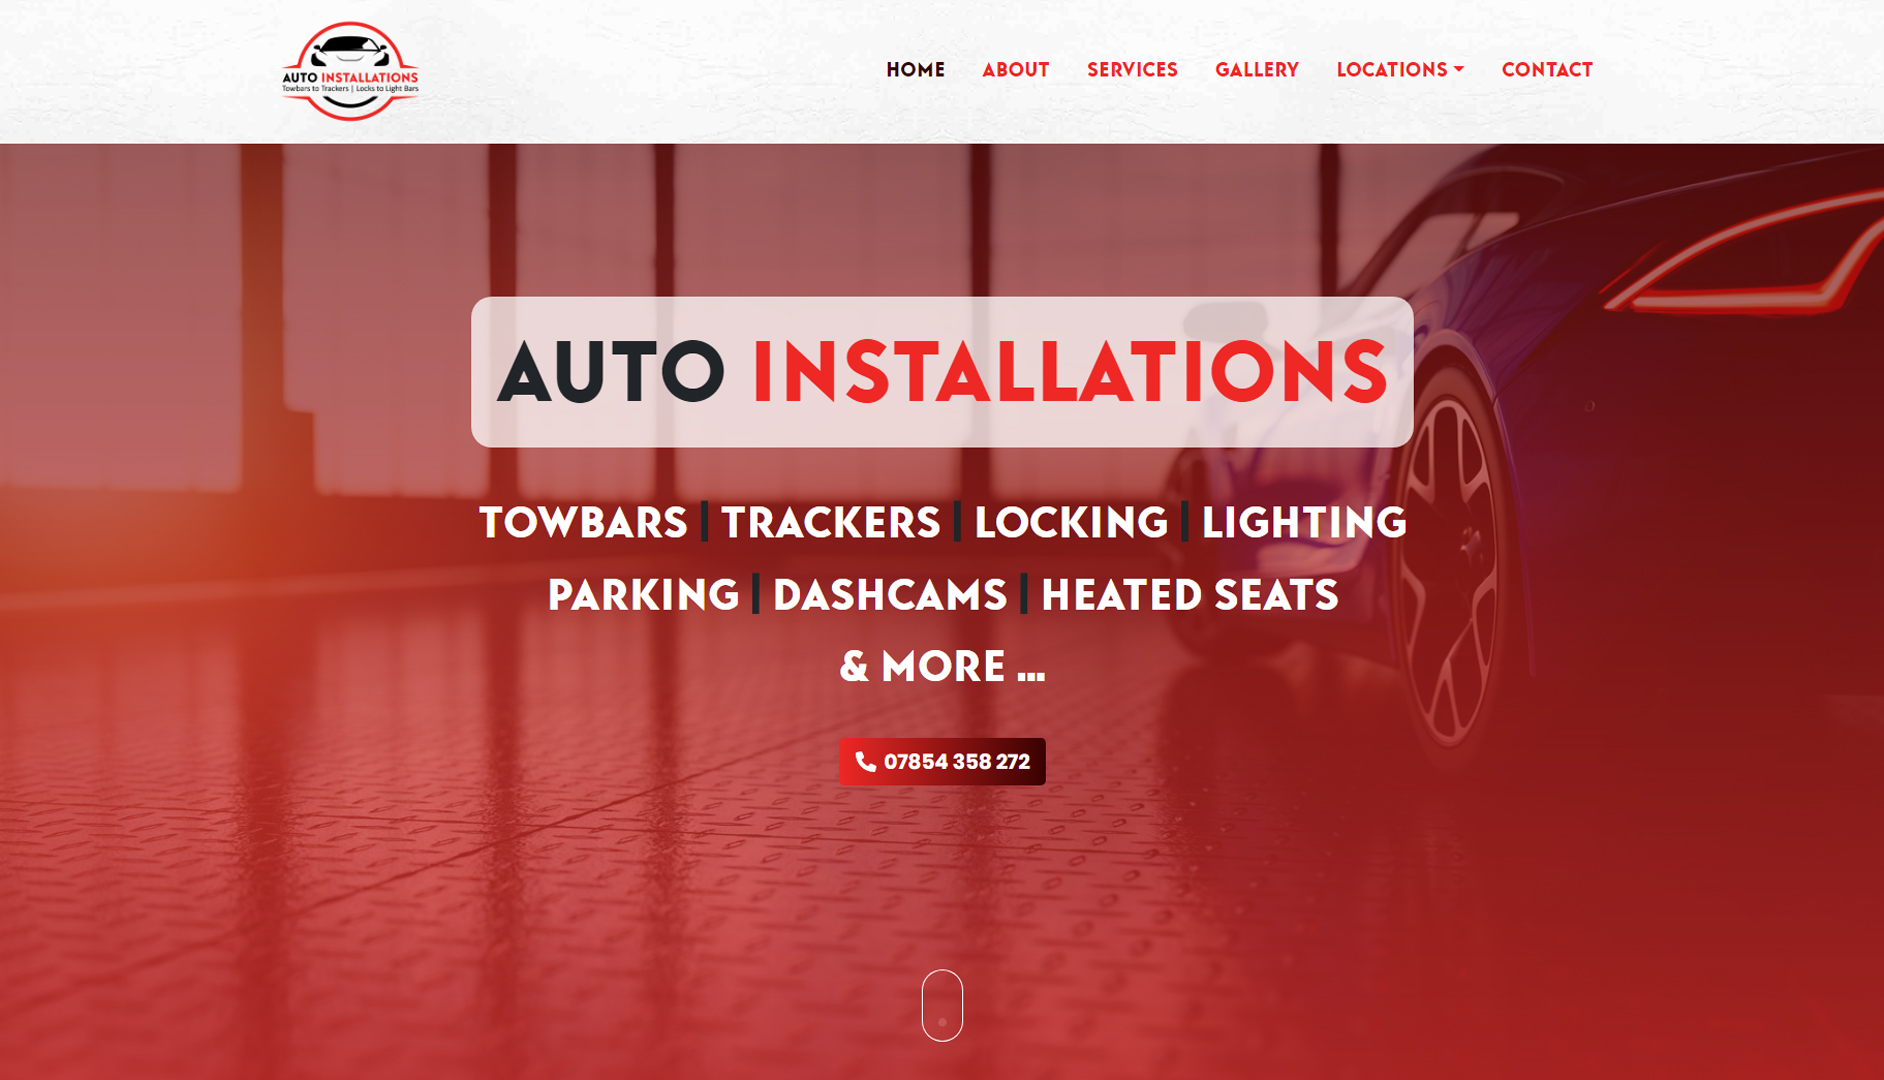 Auto Installation Services - by Cecil Web Designs